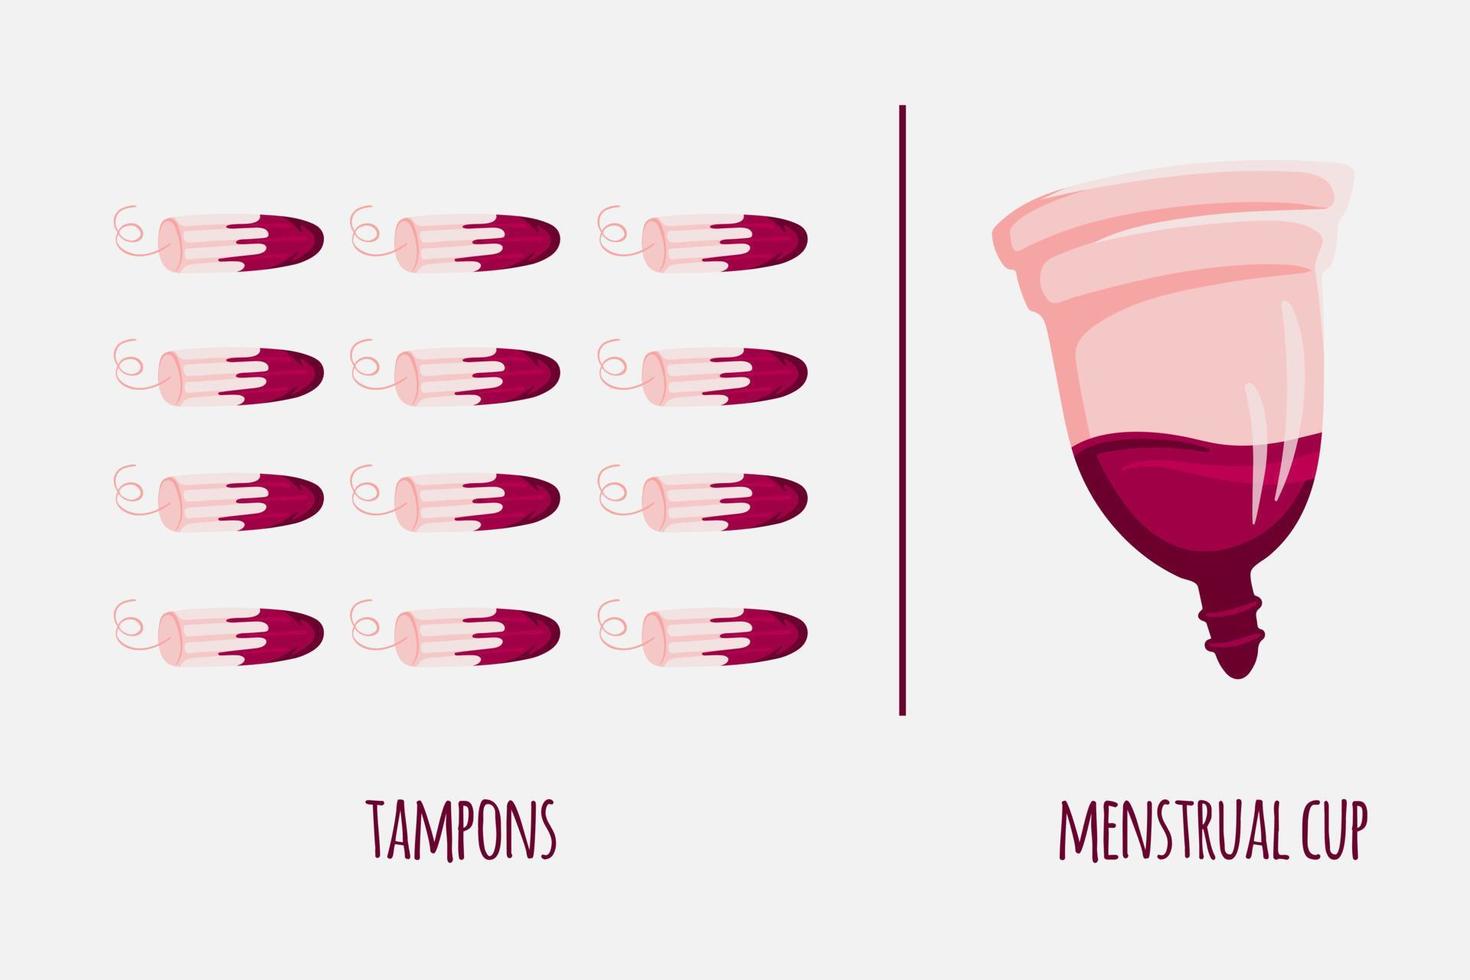 Zero waste Menstruation Period  Menstrual cup vs tampons. Vector illustration. Reusable eco friendly concept.